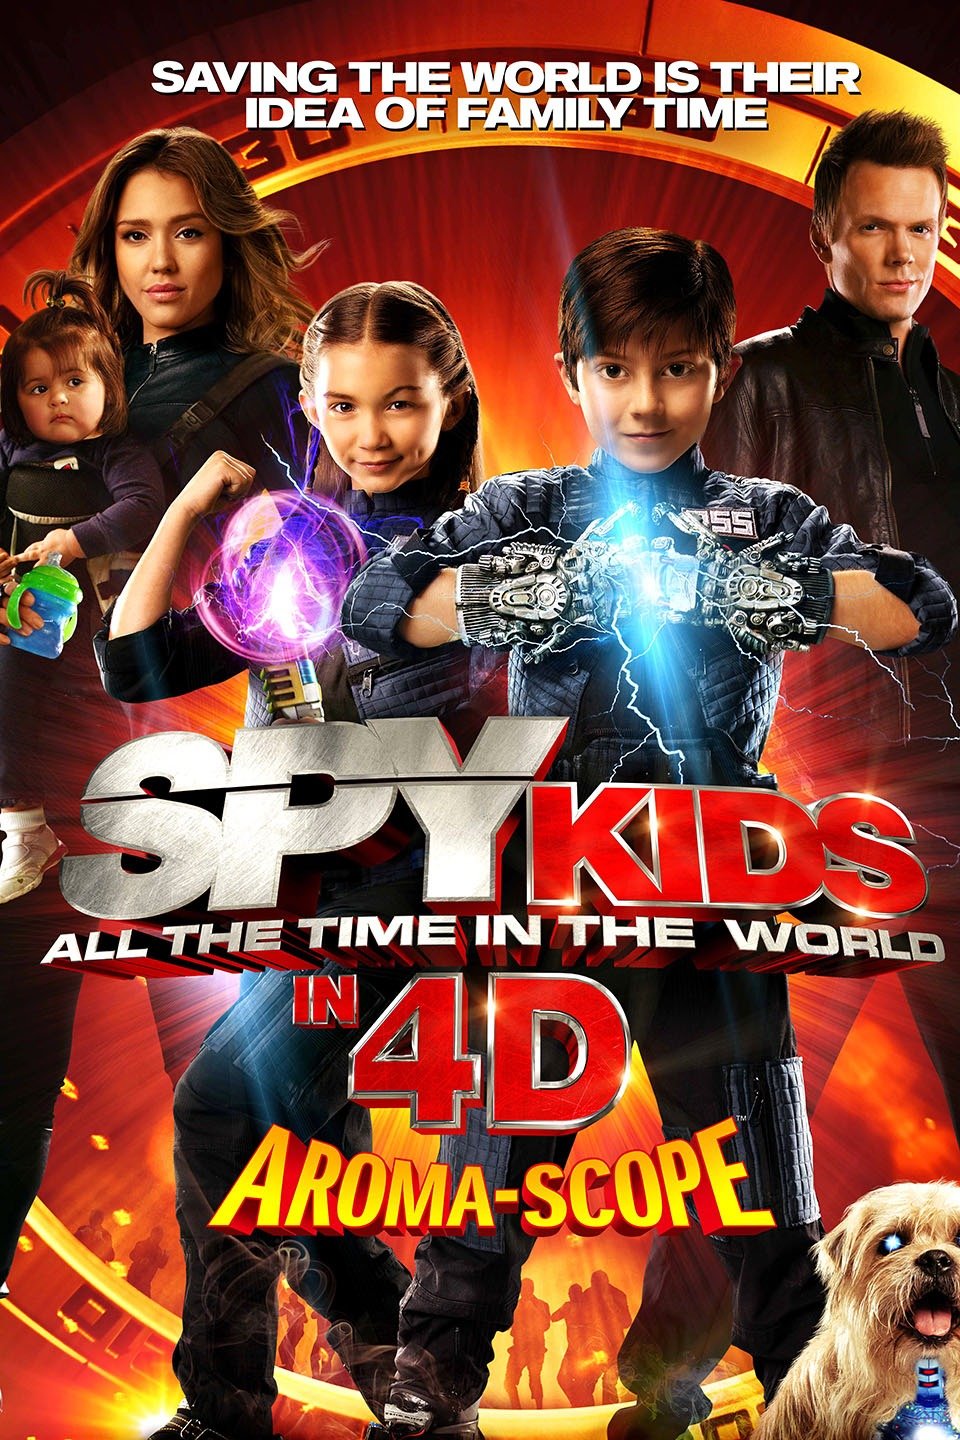 [MINI-HD] Spy Kids: All the Time in the World (2011) ซุปเปอร์ทีมระเบิดพลังทะลุจอ ภาค 4 [720p] [พากย์ไทย 5.1 + อังกฤษ 5.1] [บรรยายไทย] [เสียงไทย + ซับไทย] [ONE2UP]